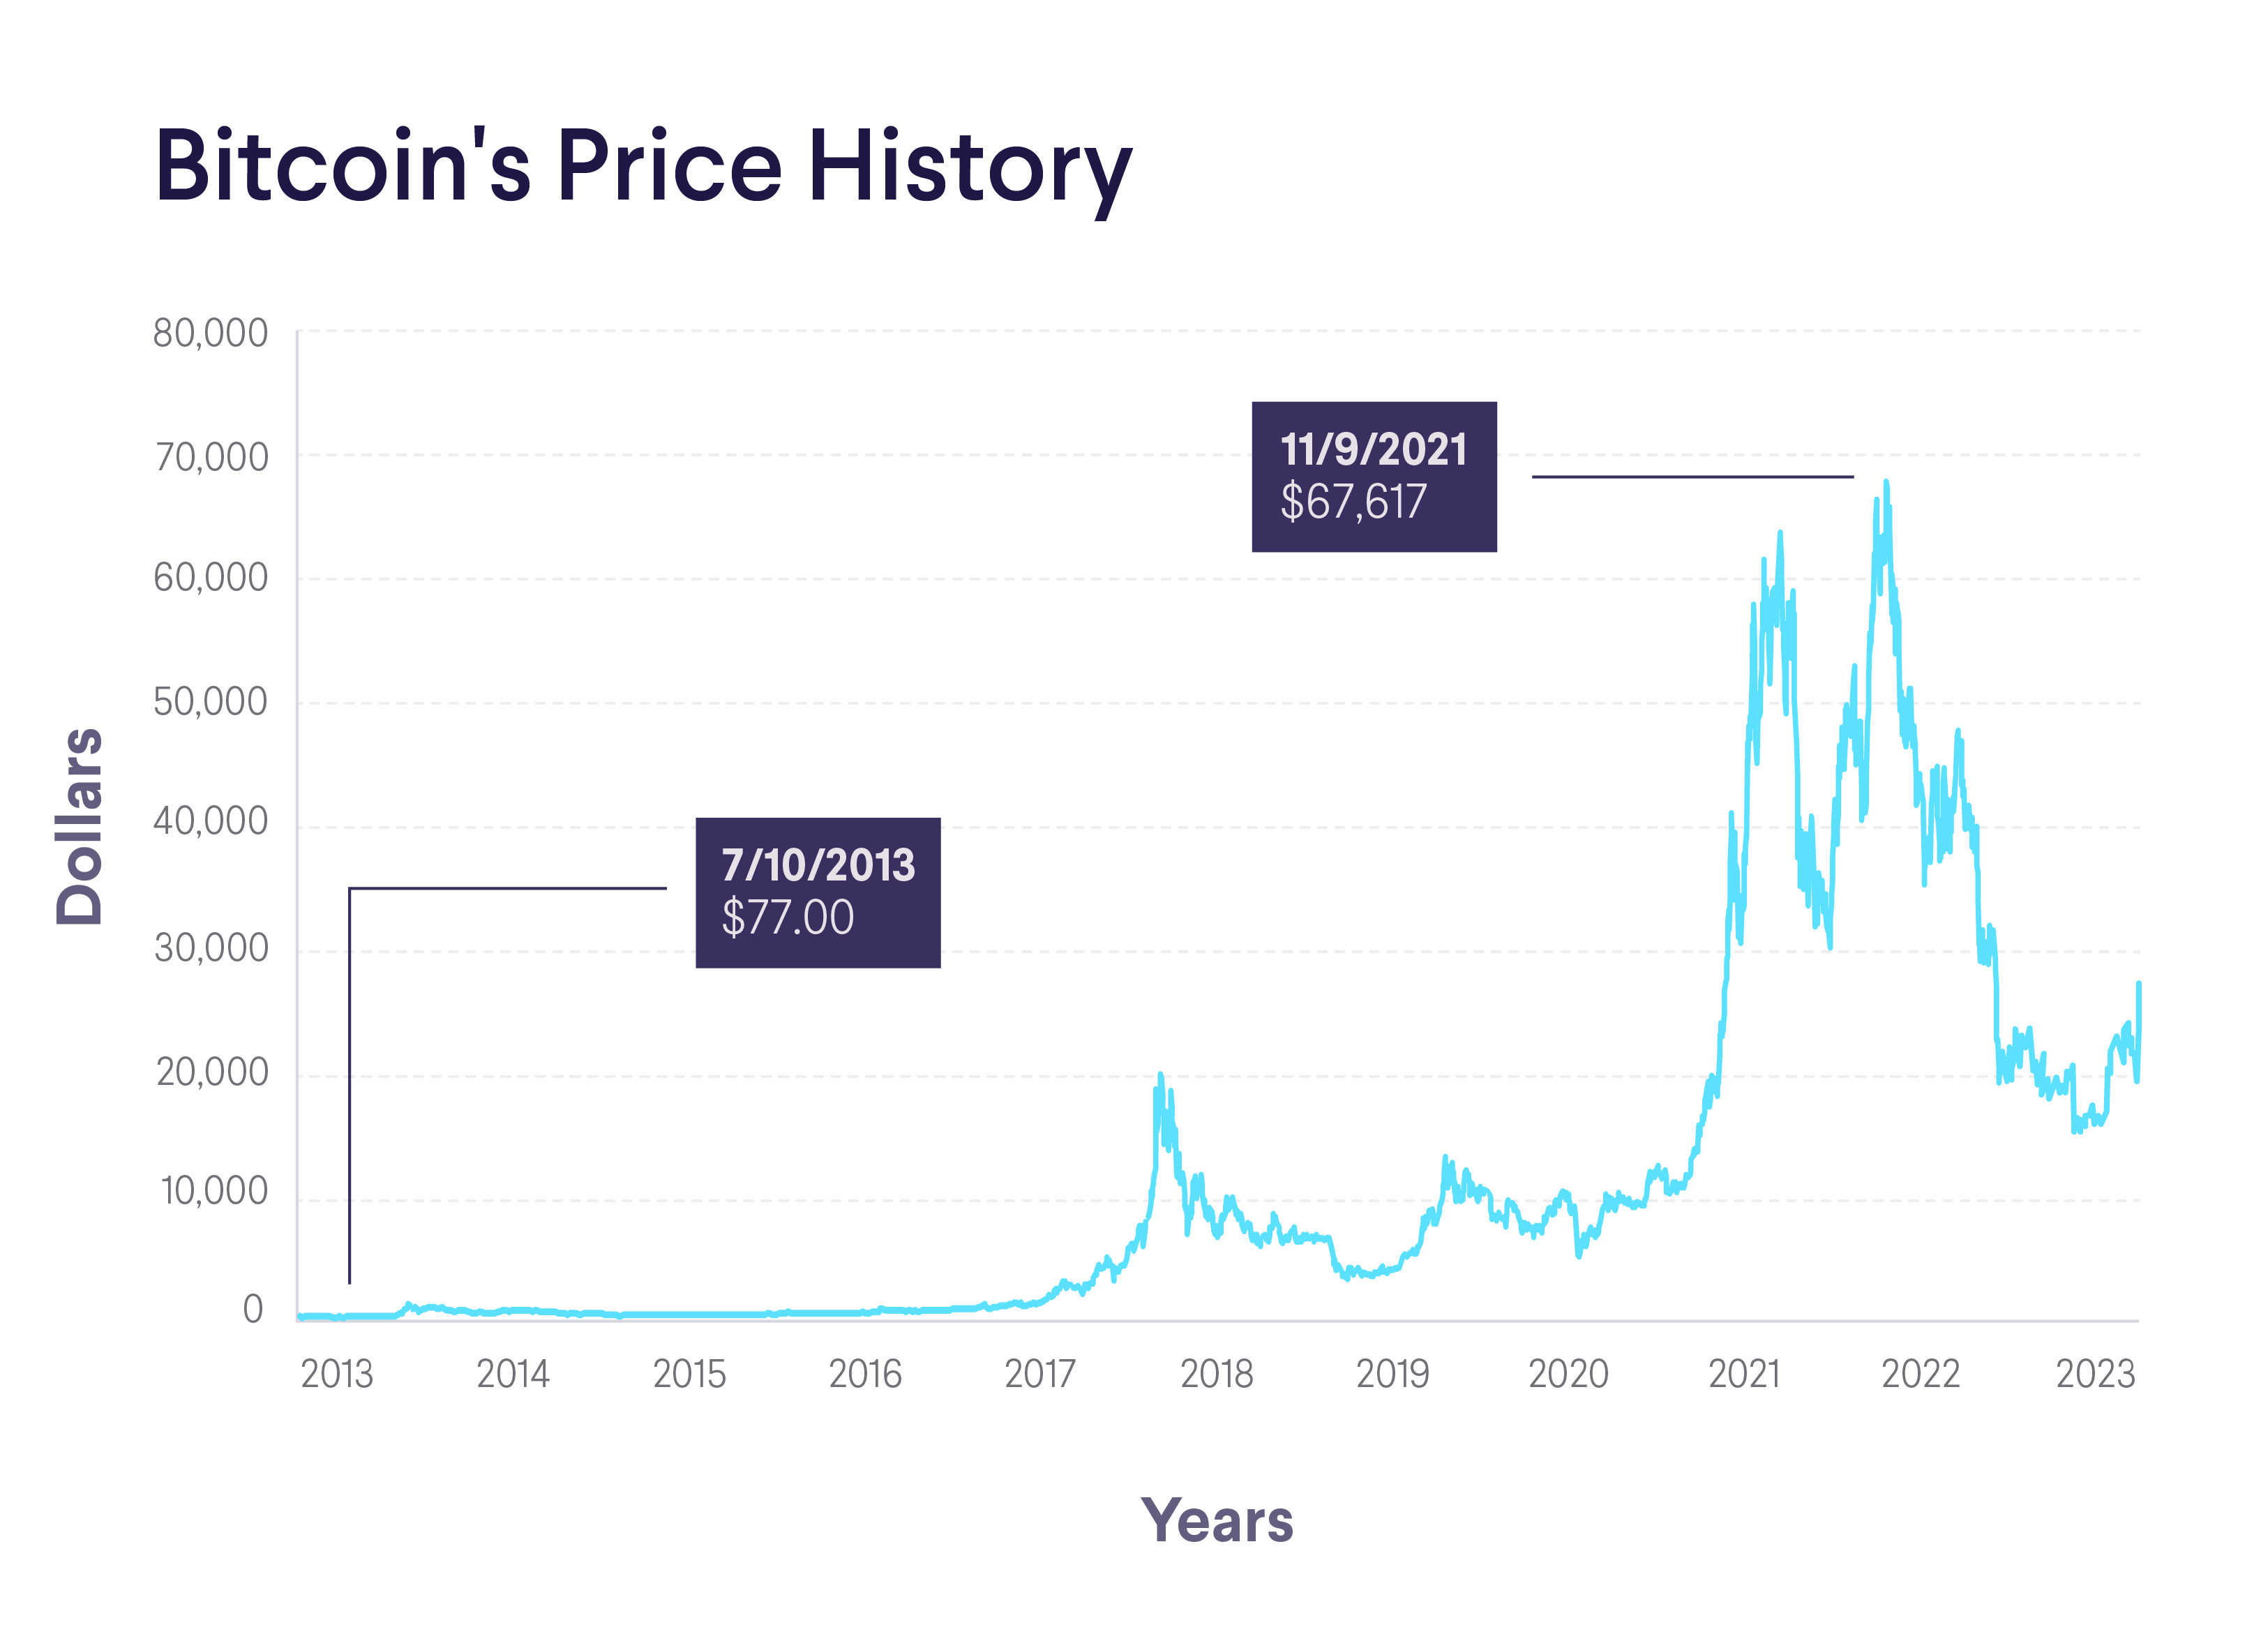 Bitcoin hits all-time high above 69k | TechCrunch